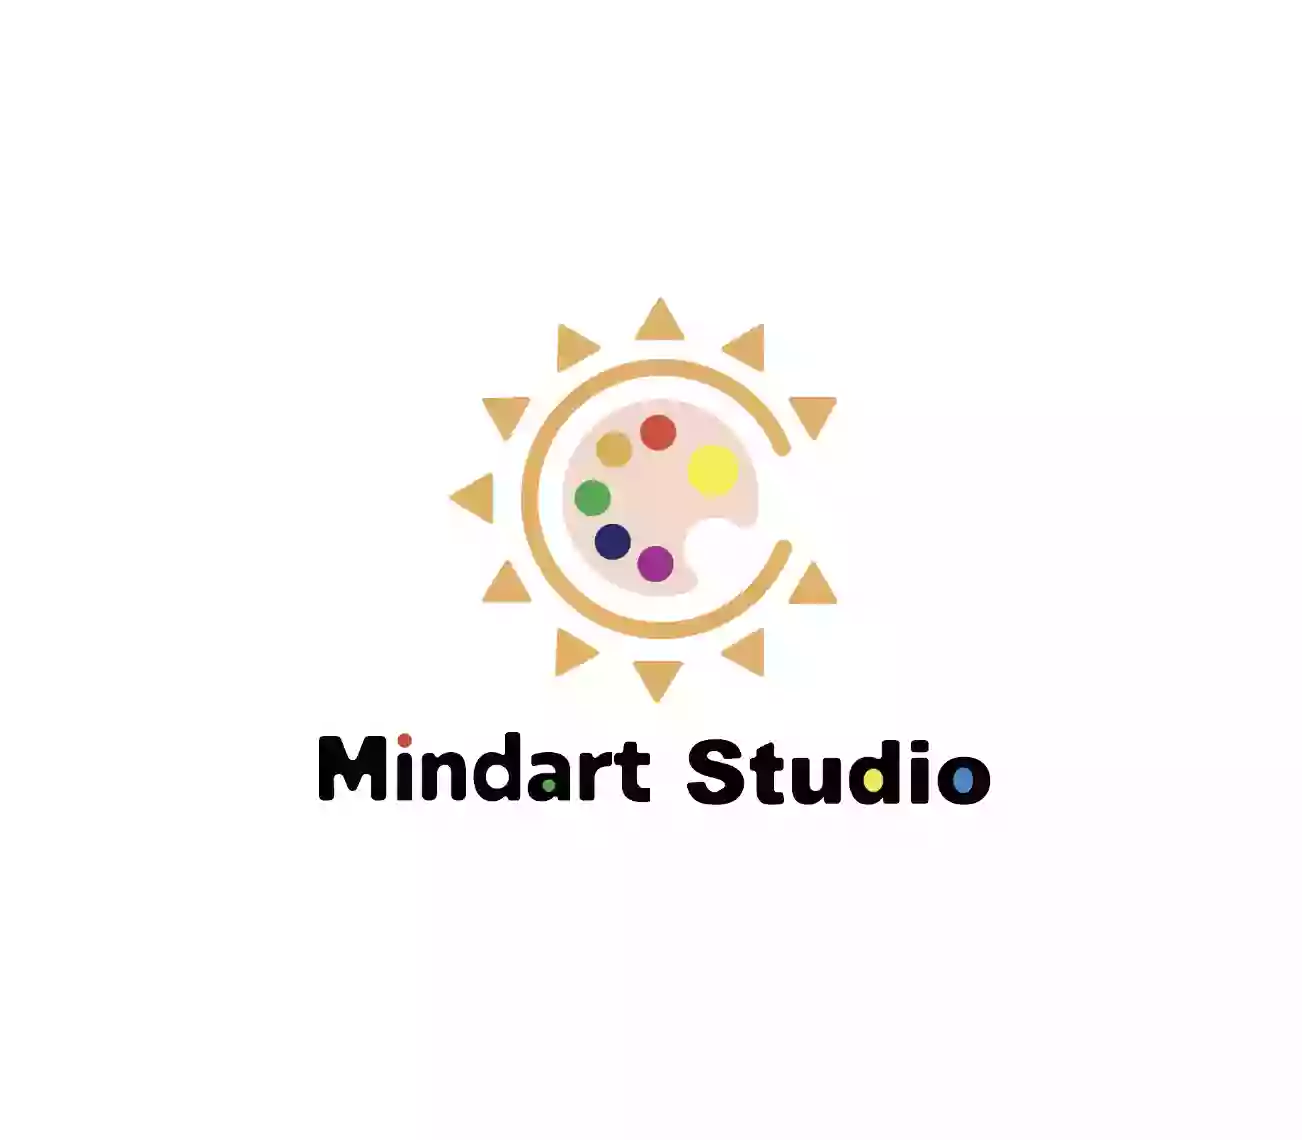 Mindart Studio